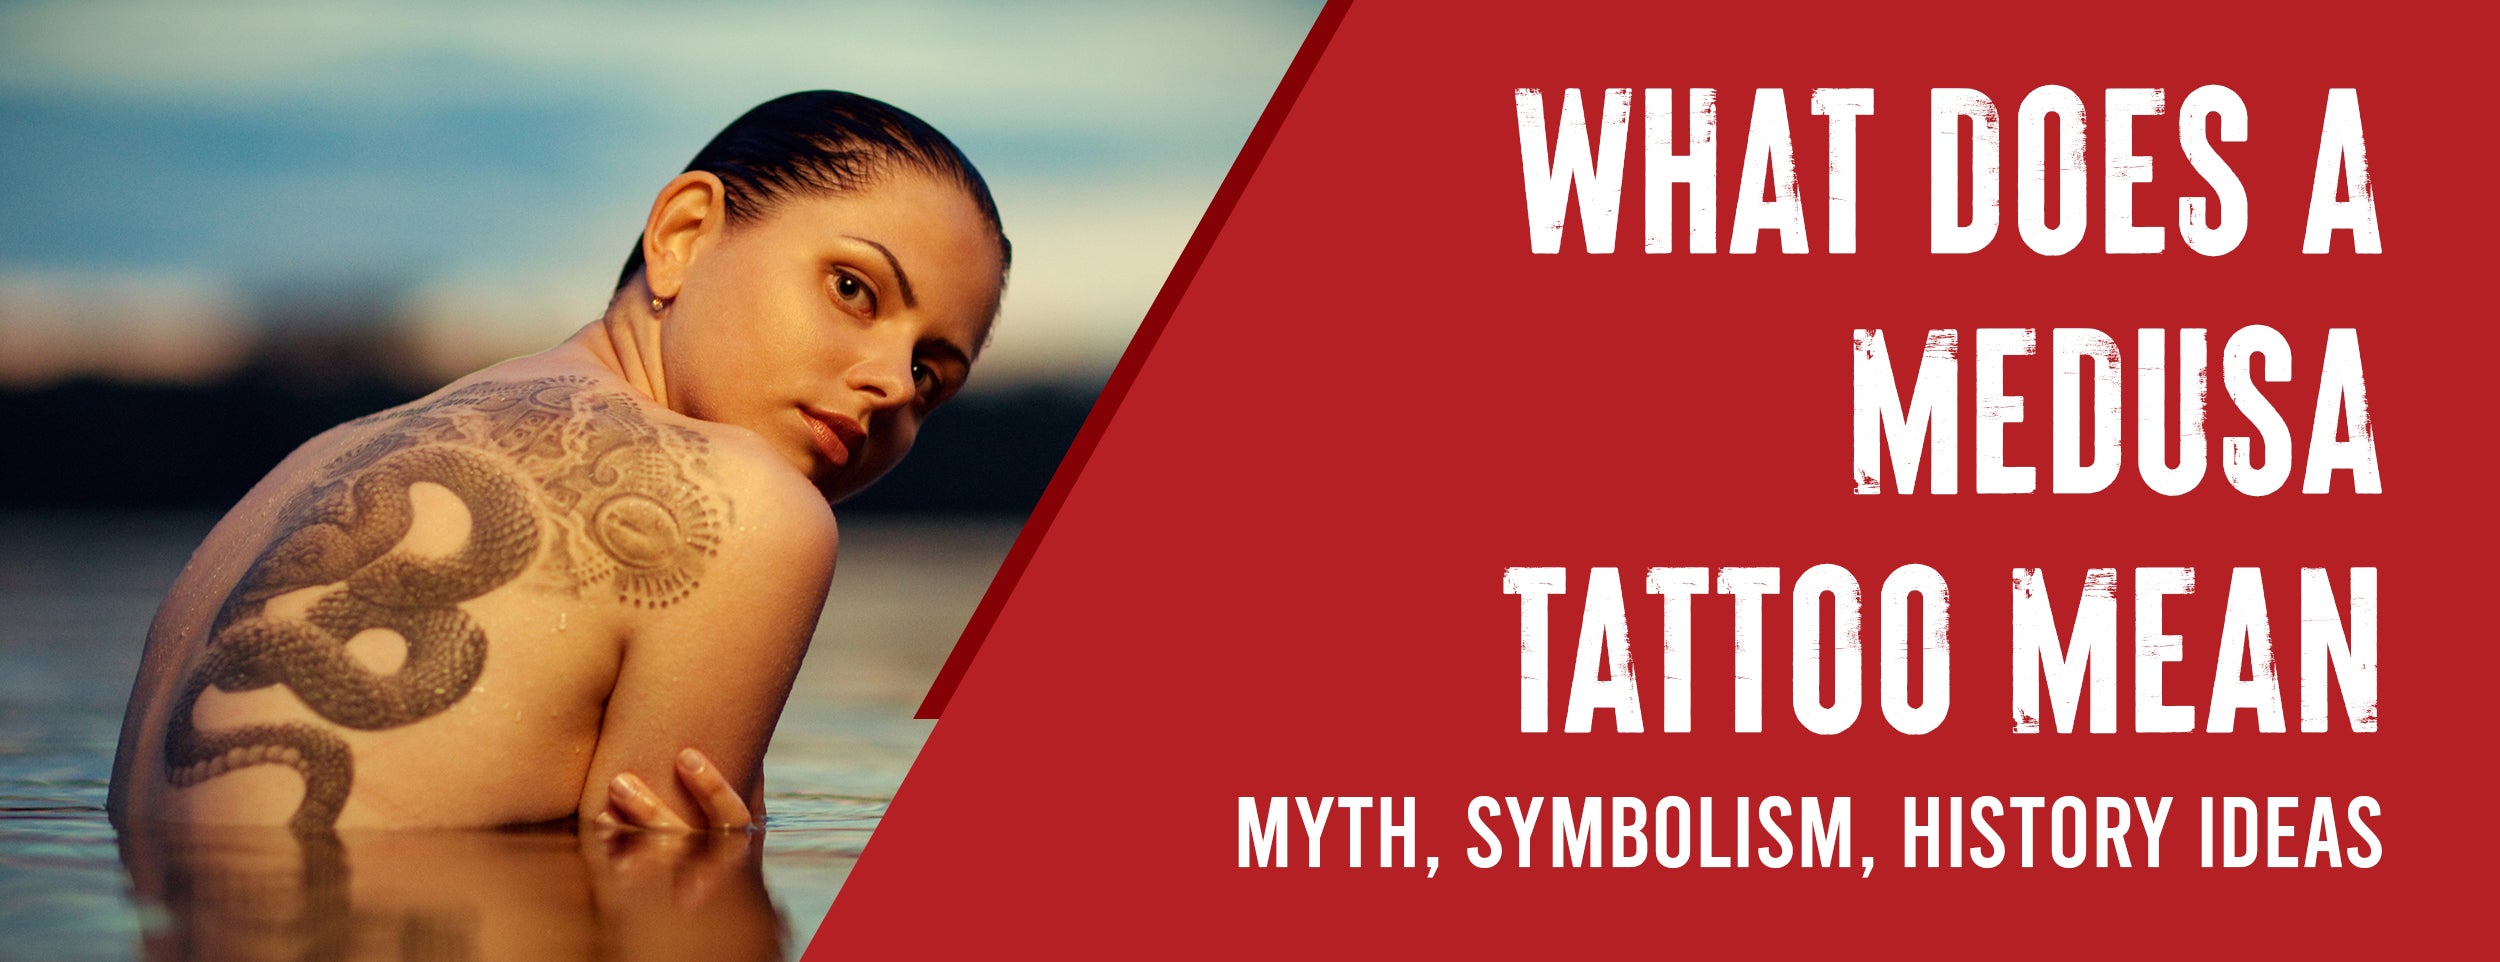 Symbolism, Myth, and History of Medusa Tattoos